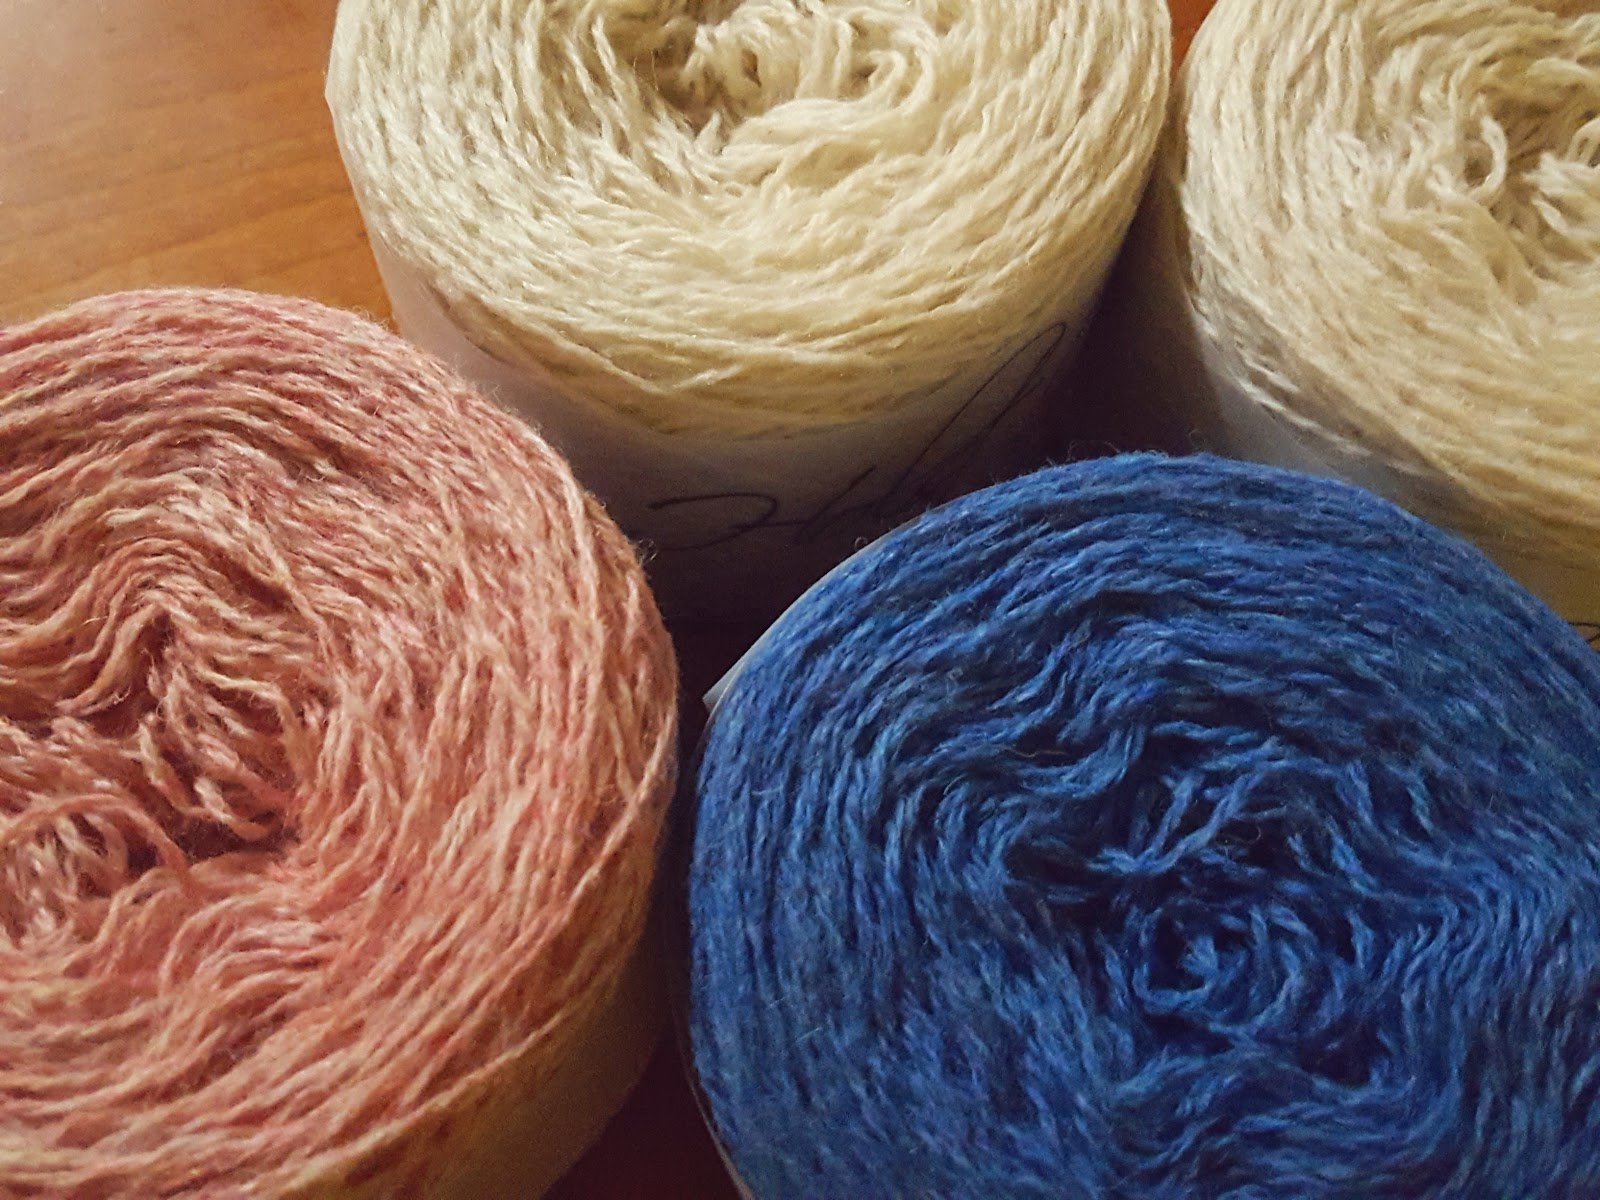 Slow knitting: BOのために到着した毛糸 ～Holst Garn～